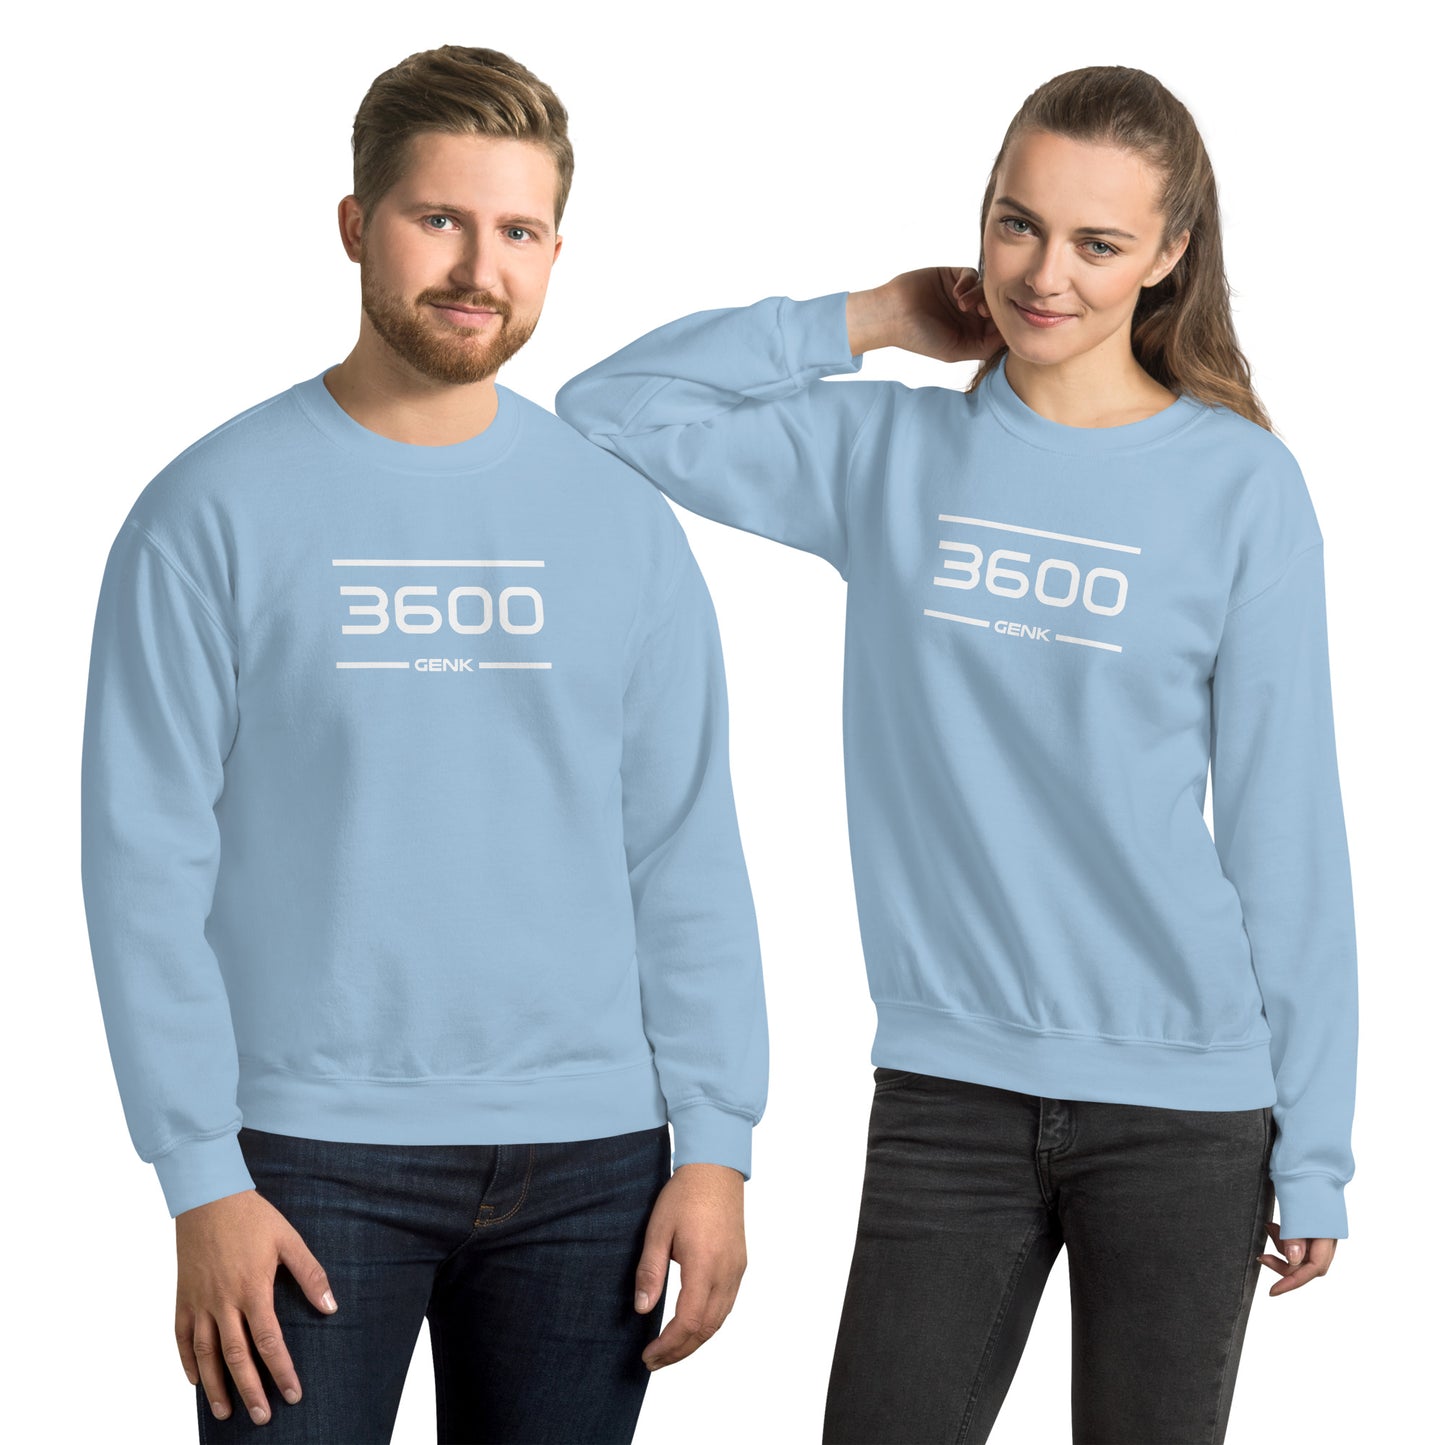 Sweater - 3600 - Genk (M/V)